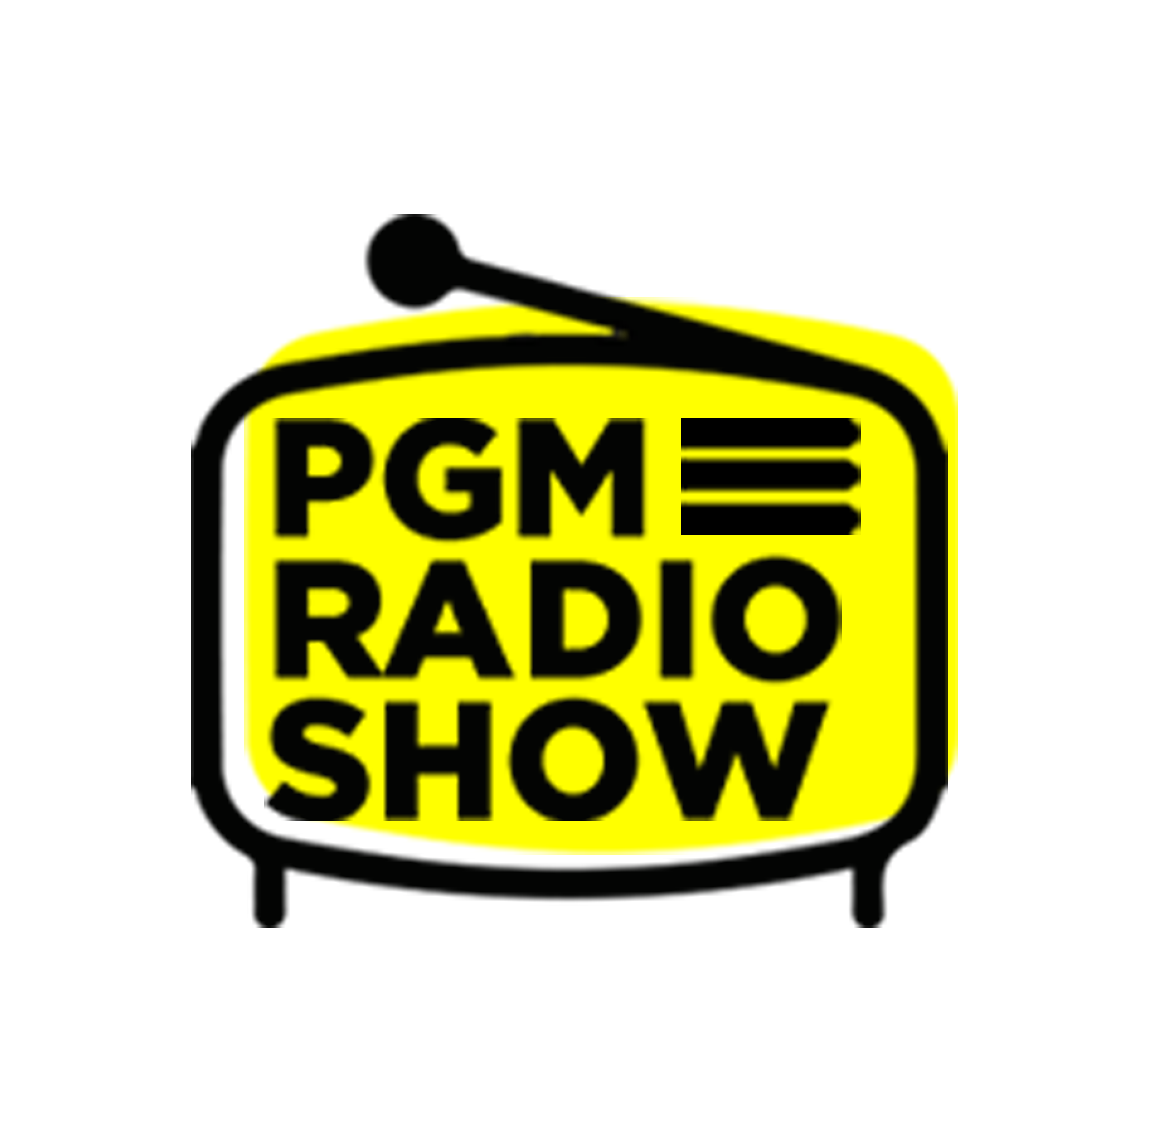 The PGM Radio Show